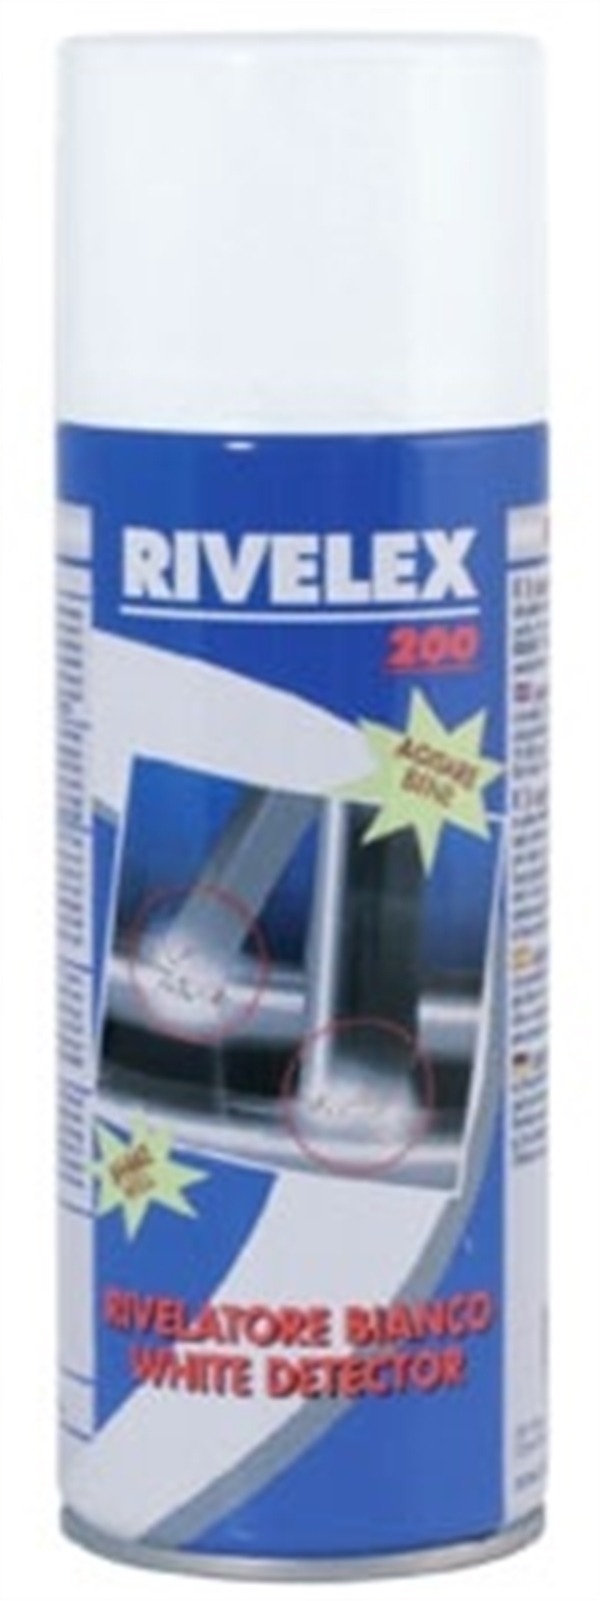  RIVELEX 200